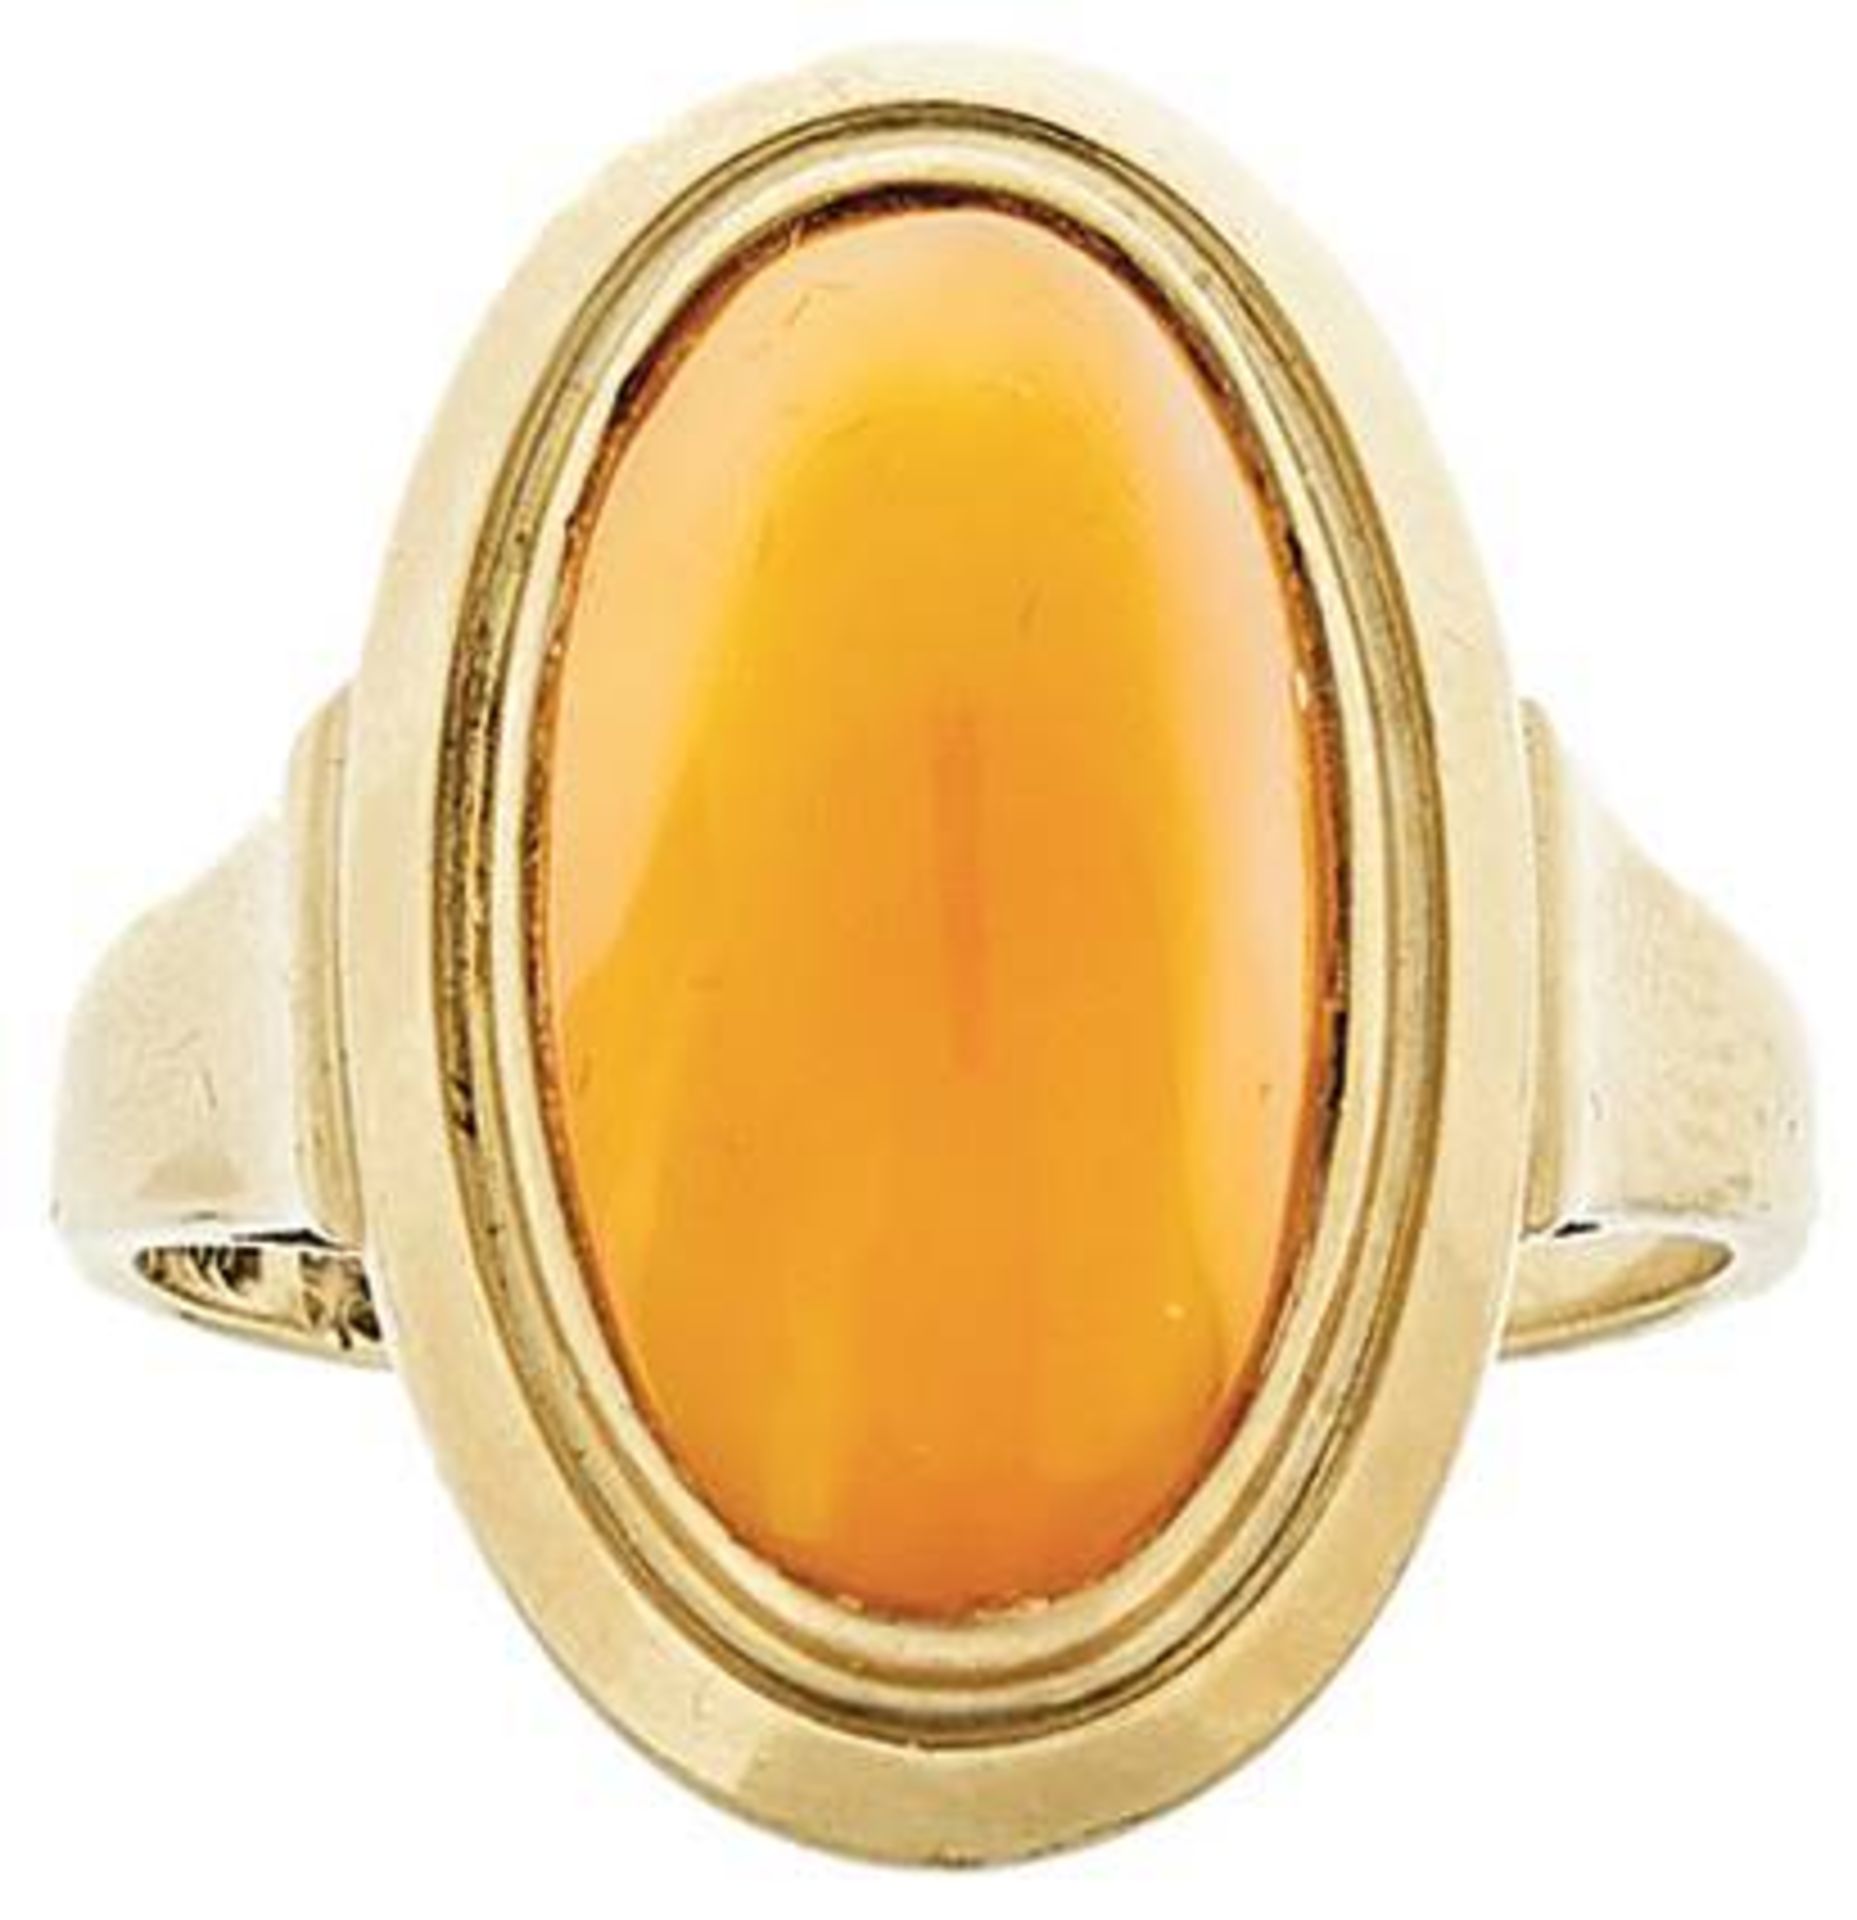 Bernstein Ring, honigfarben, muglig, 333 Gelbgold, 3,5g, Ringkopf 20,4x 13,3mm, gestempelt und